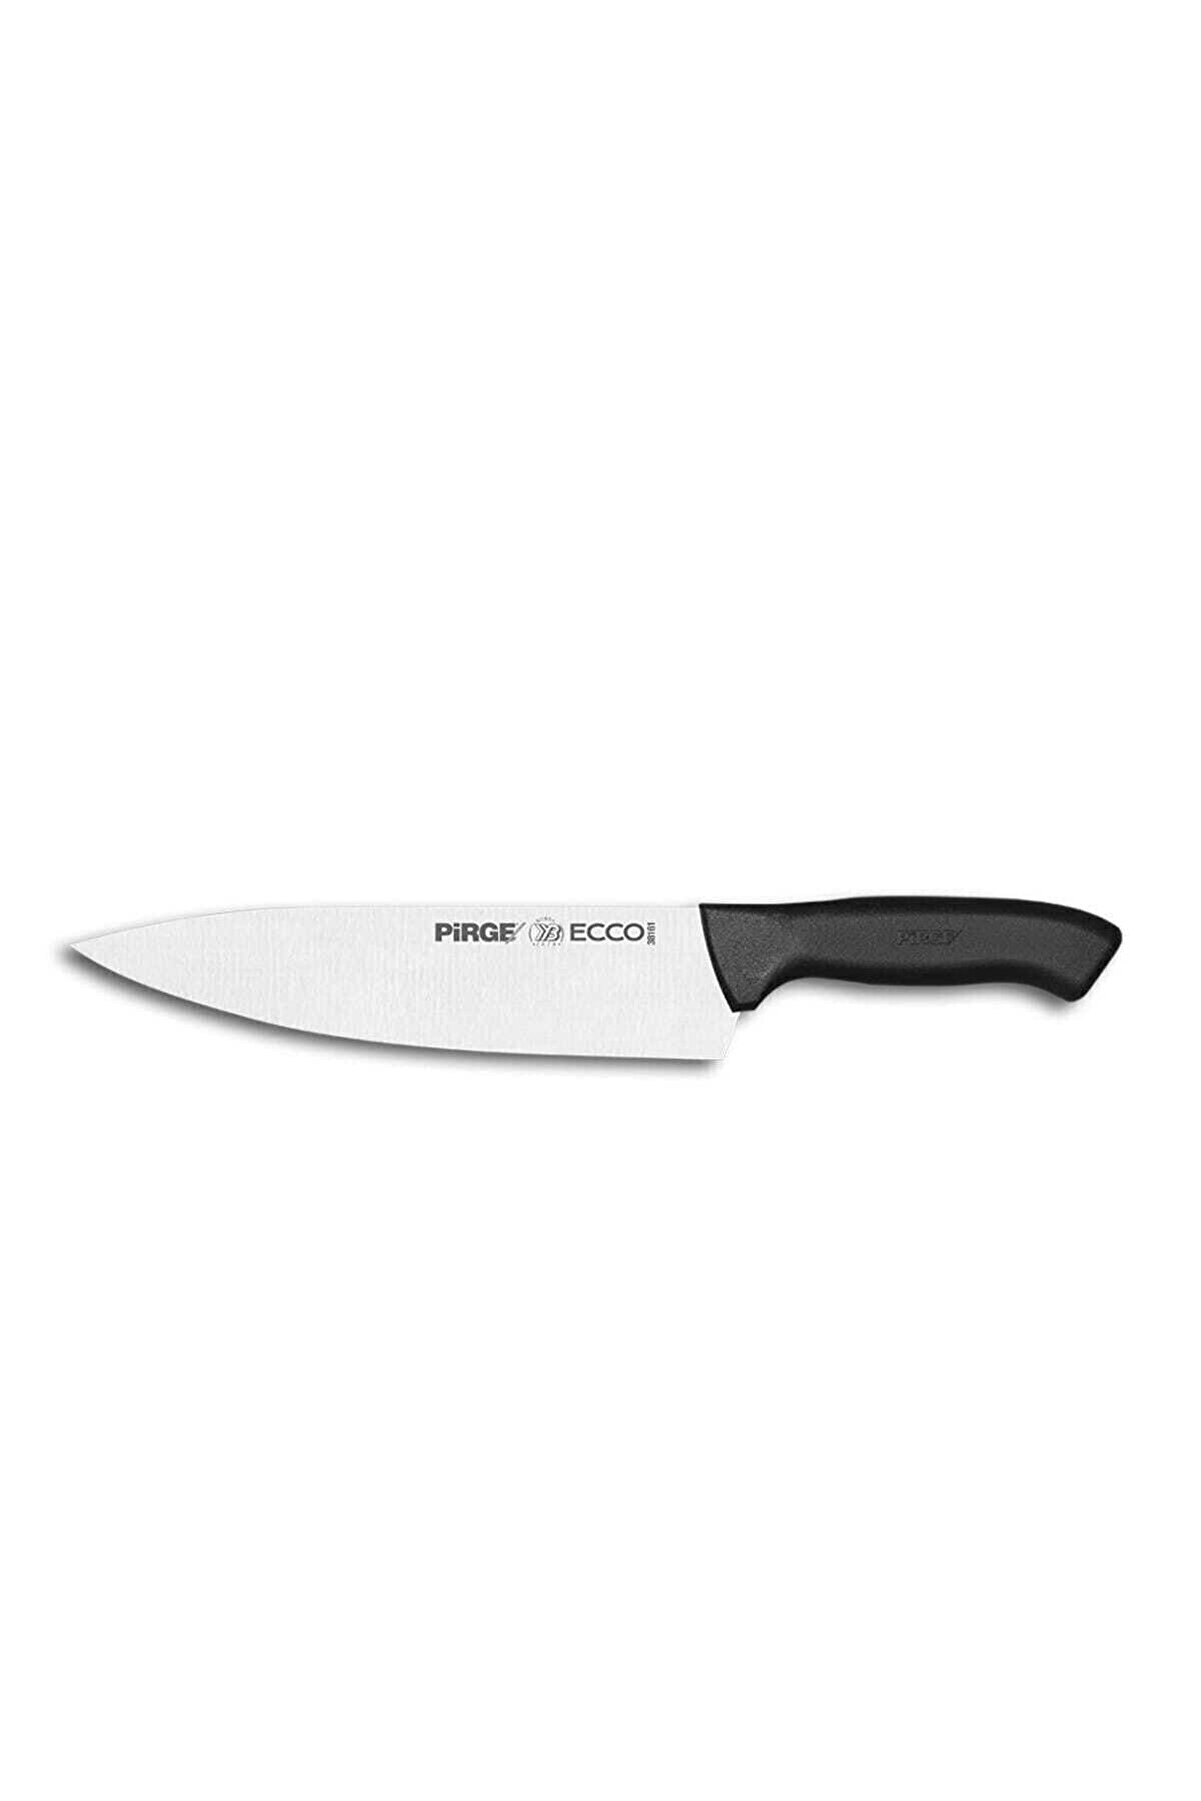 Pirge Ecco Şef Bıçağı 21 Cm Siyah- 38161